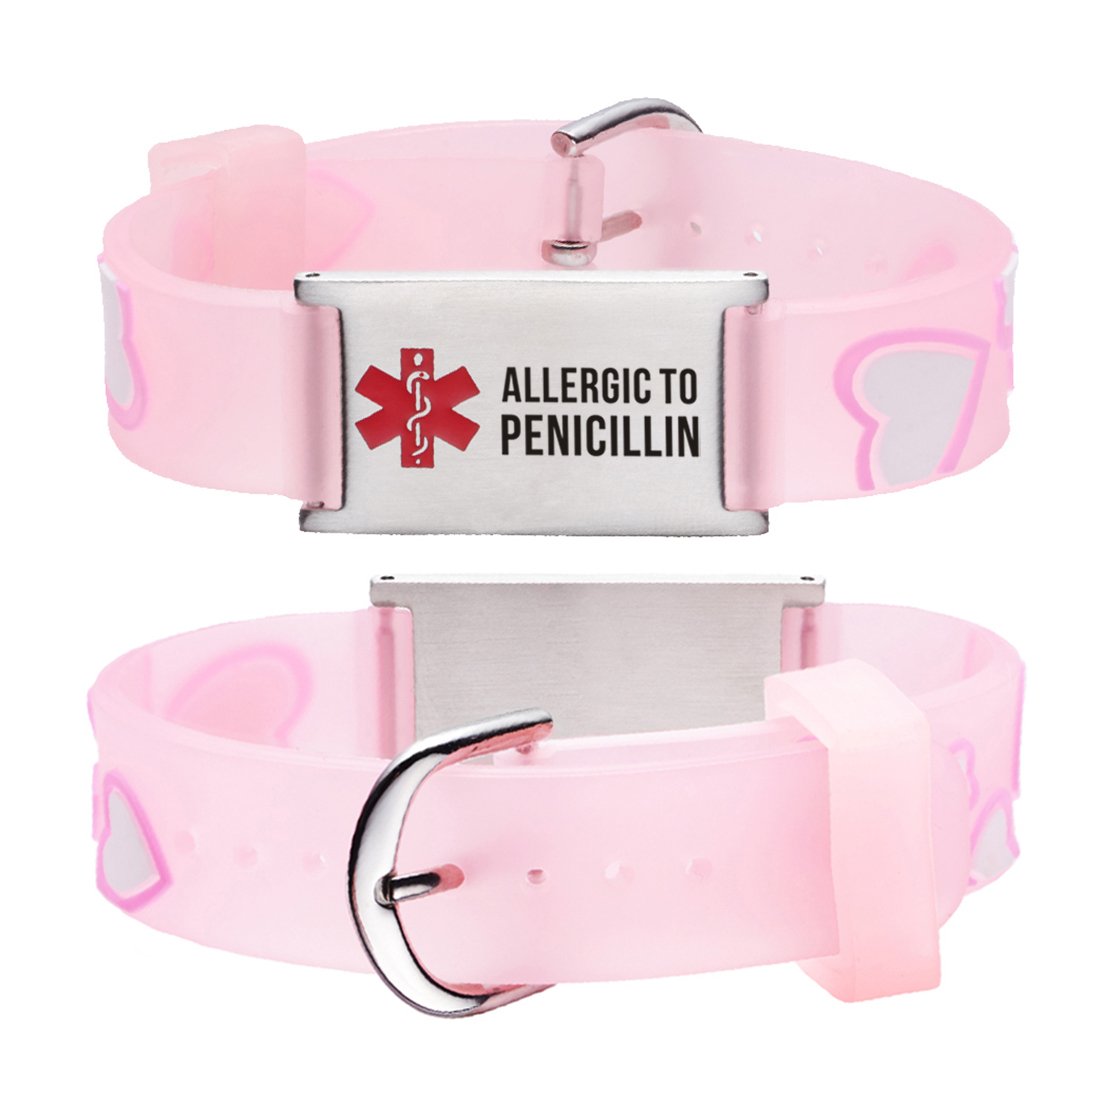 Allergic to Penicillin Alert Bracelet for kids-Pink Heart